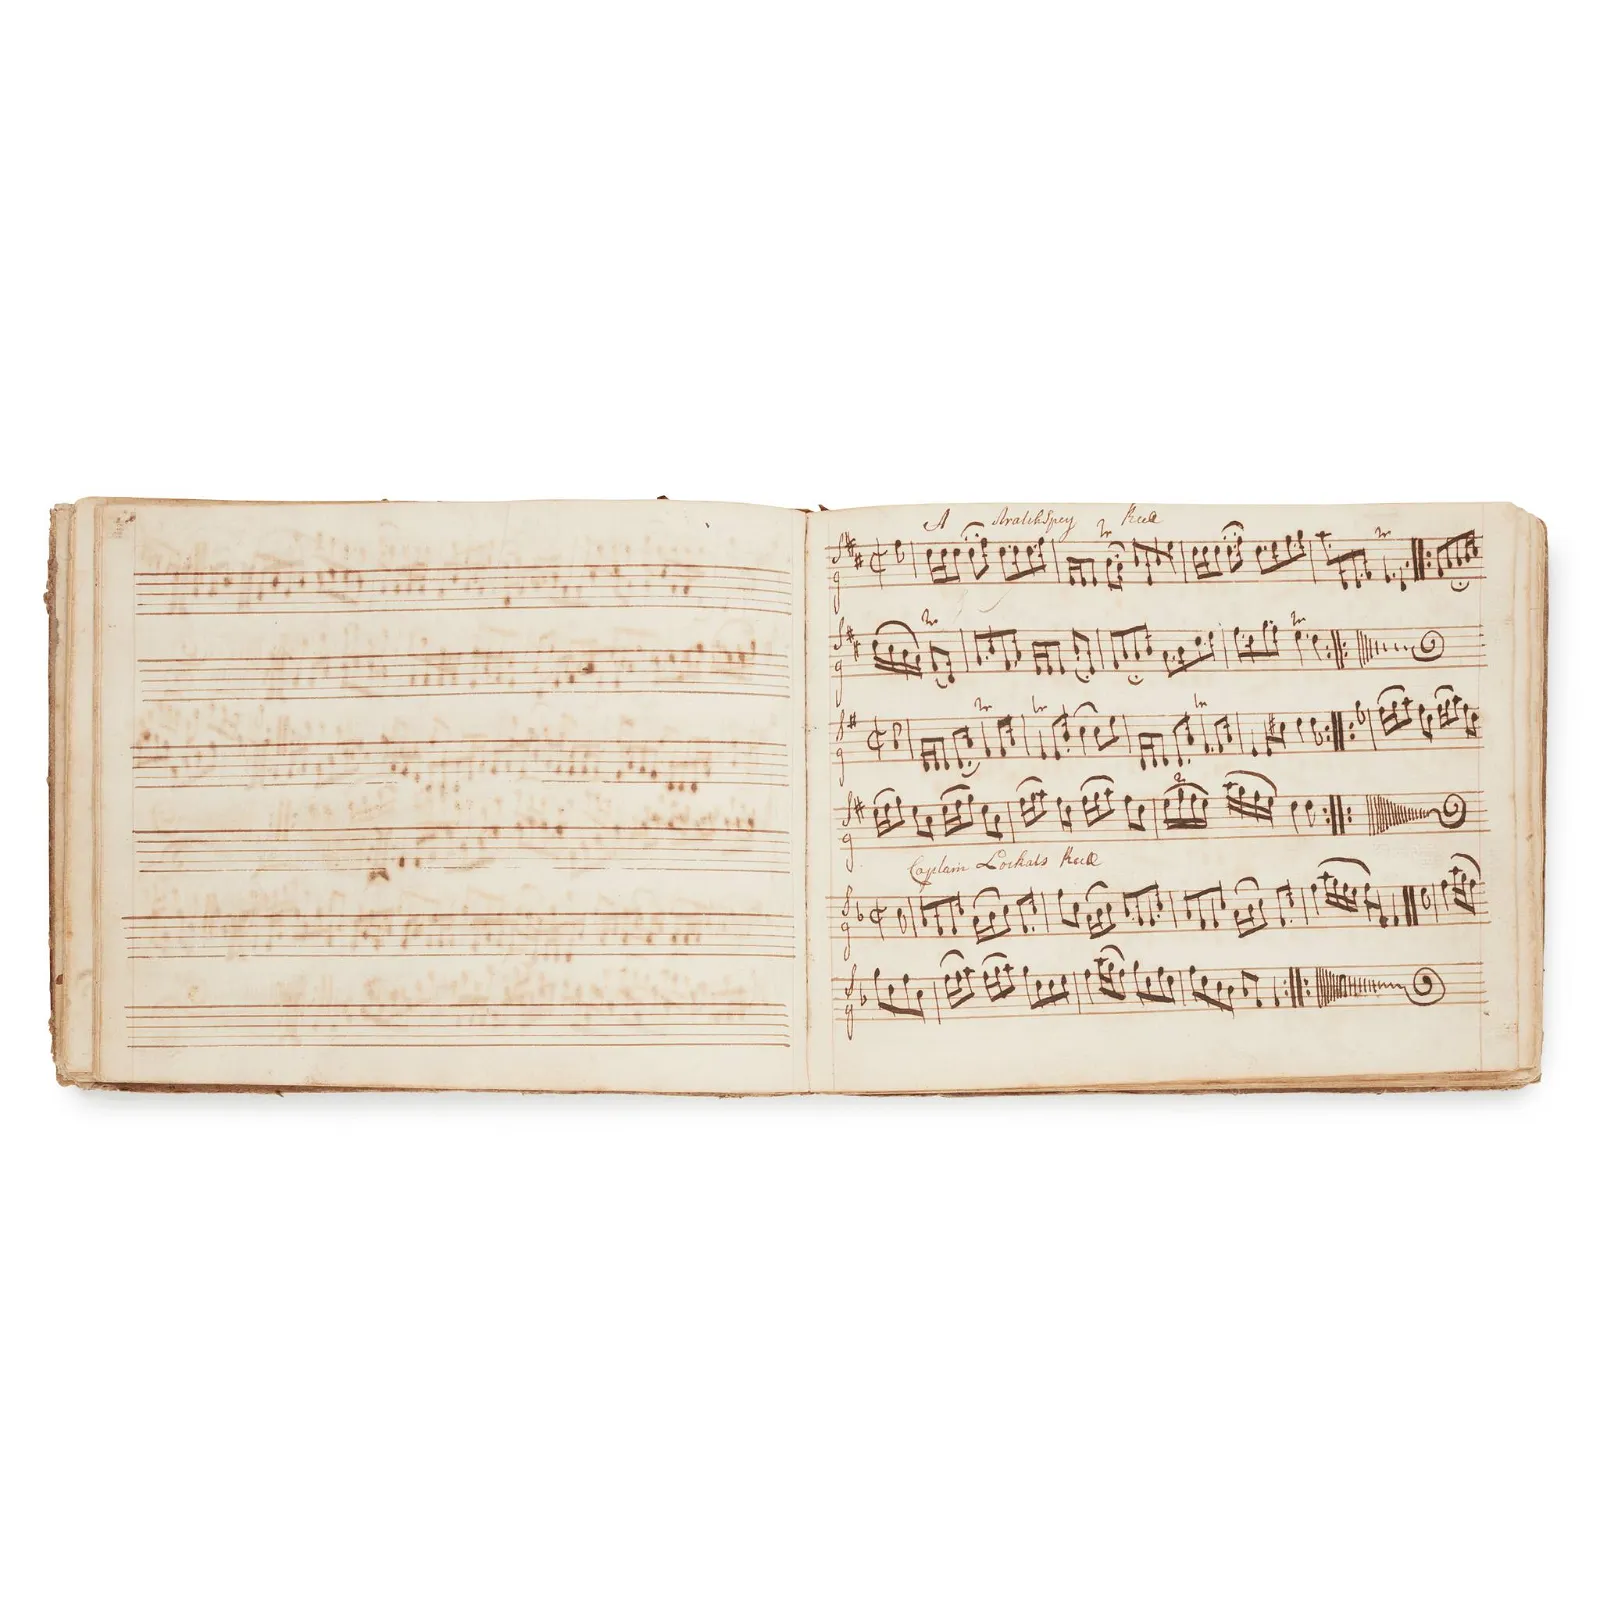 Scottish music reel book of Elizabeth Rose of Kilravock, circa 1766, at Lyon & Turnbull August 16, 2023. Estimate: £3,000-£5,000 ($3835-$6391).